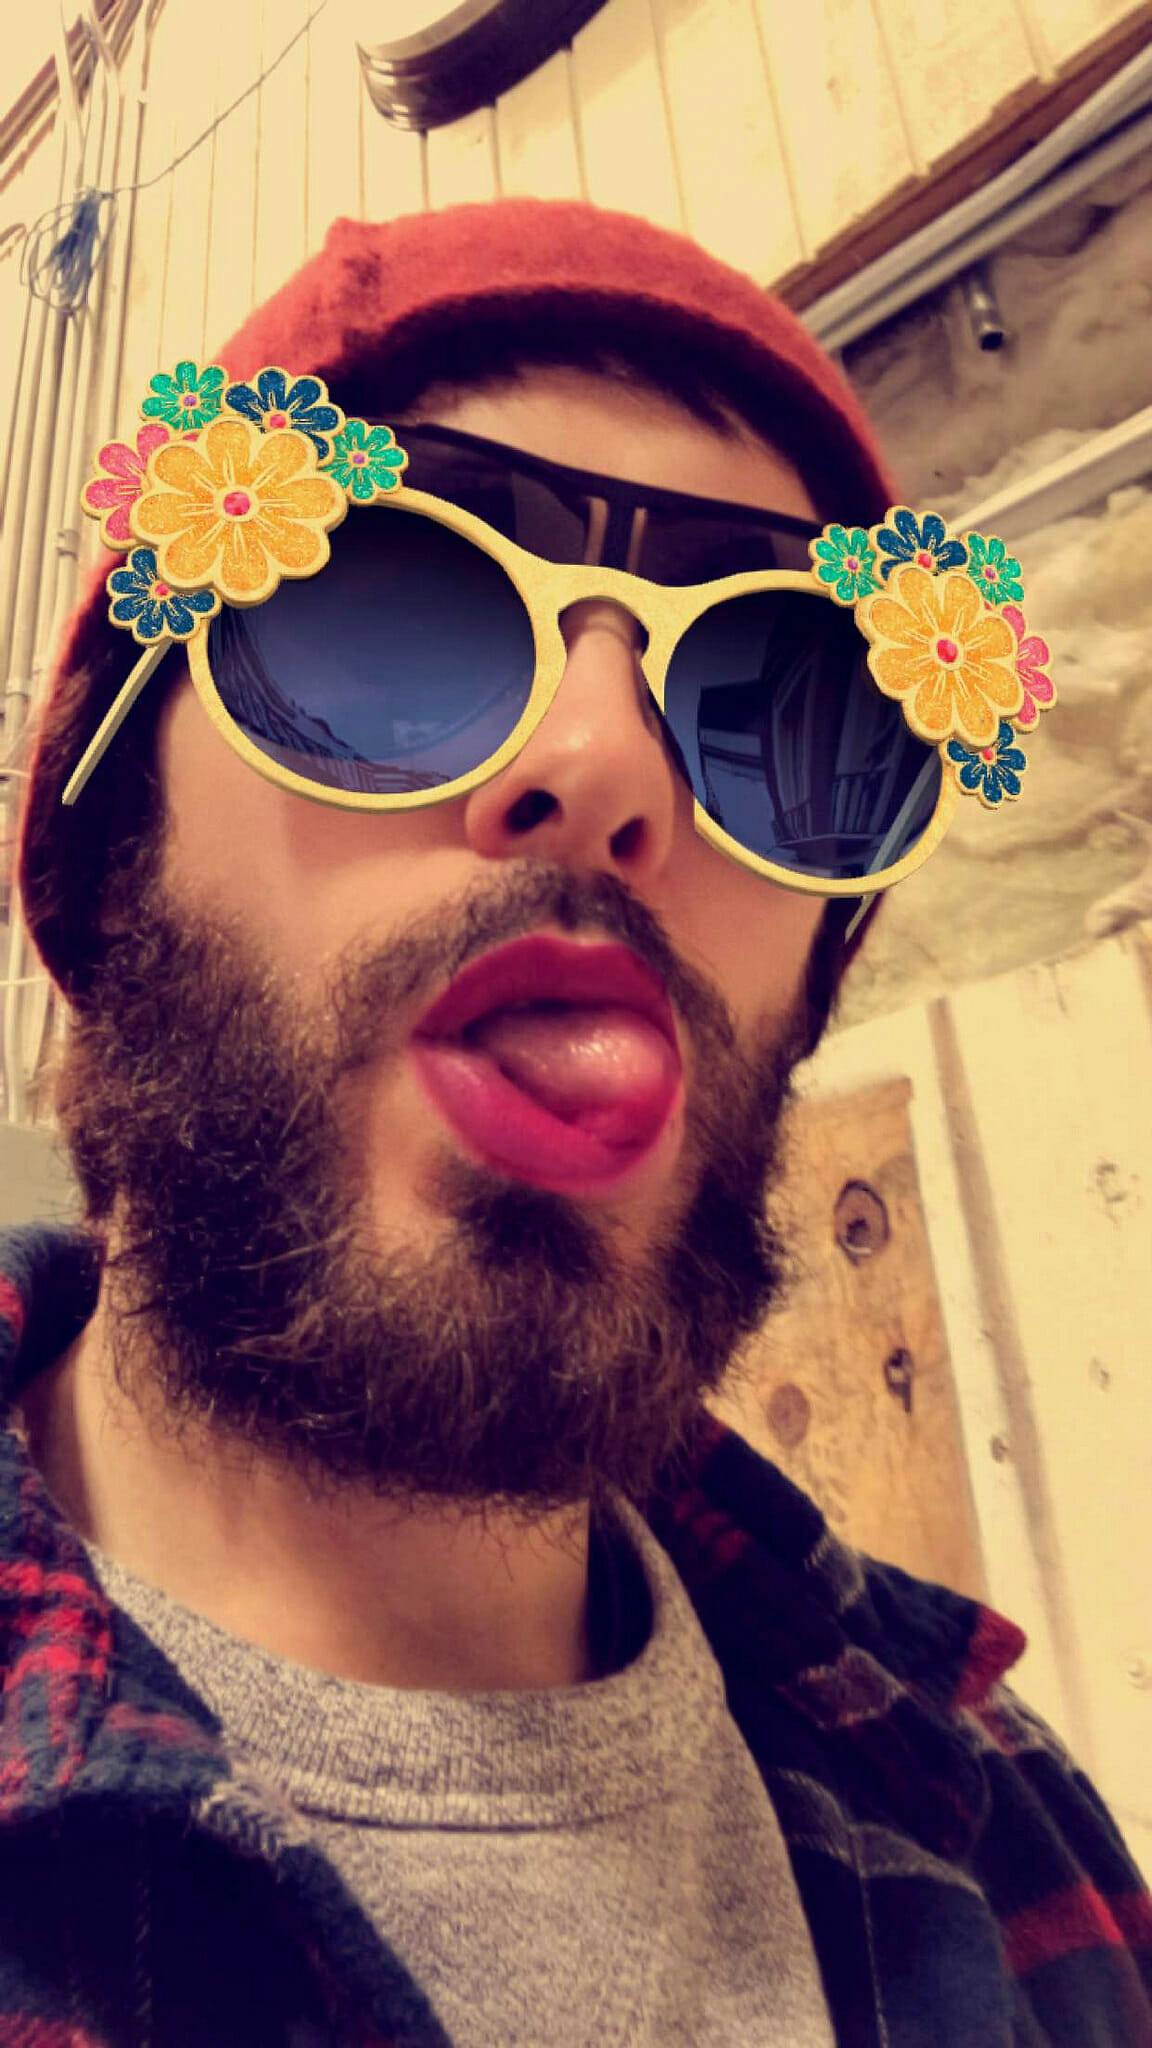 Jared Leto on Snapchat